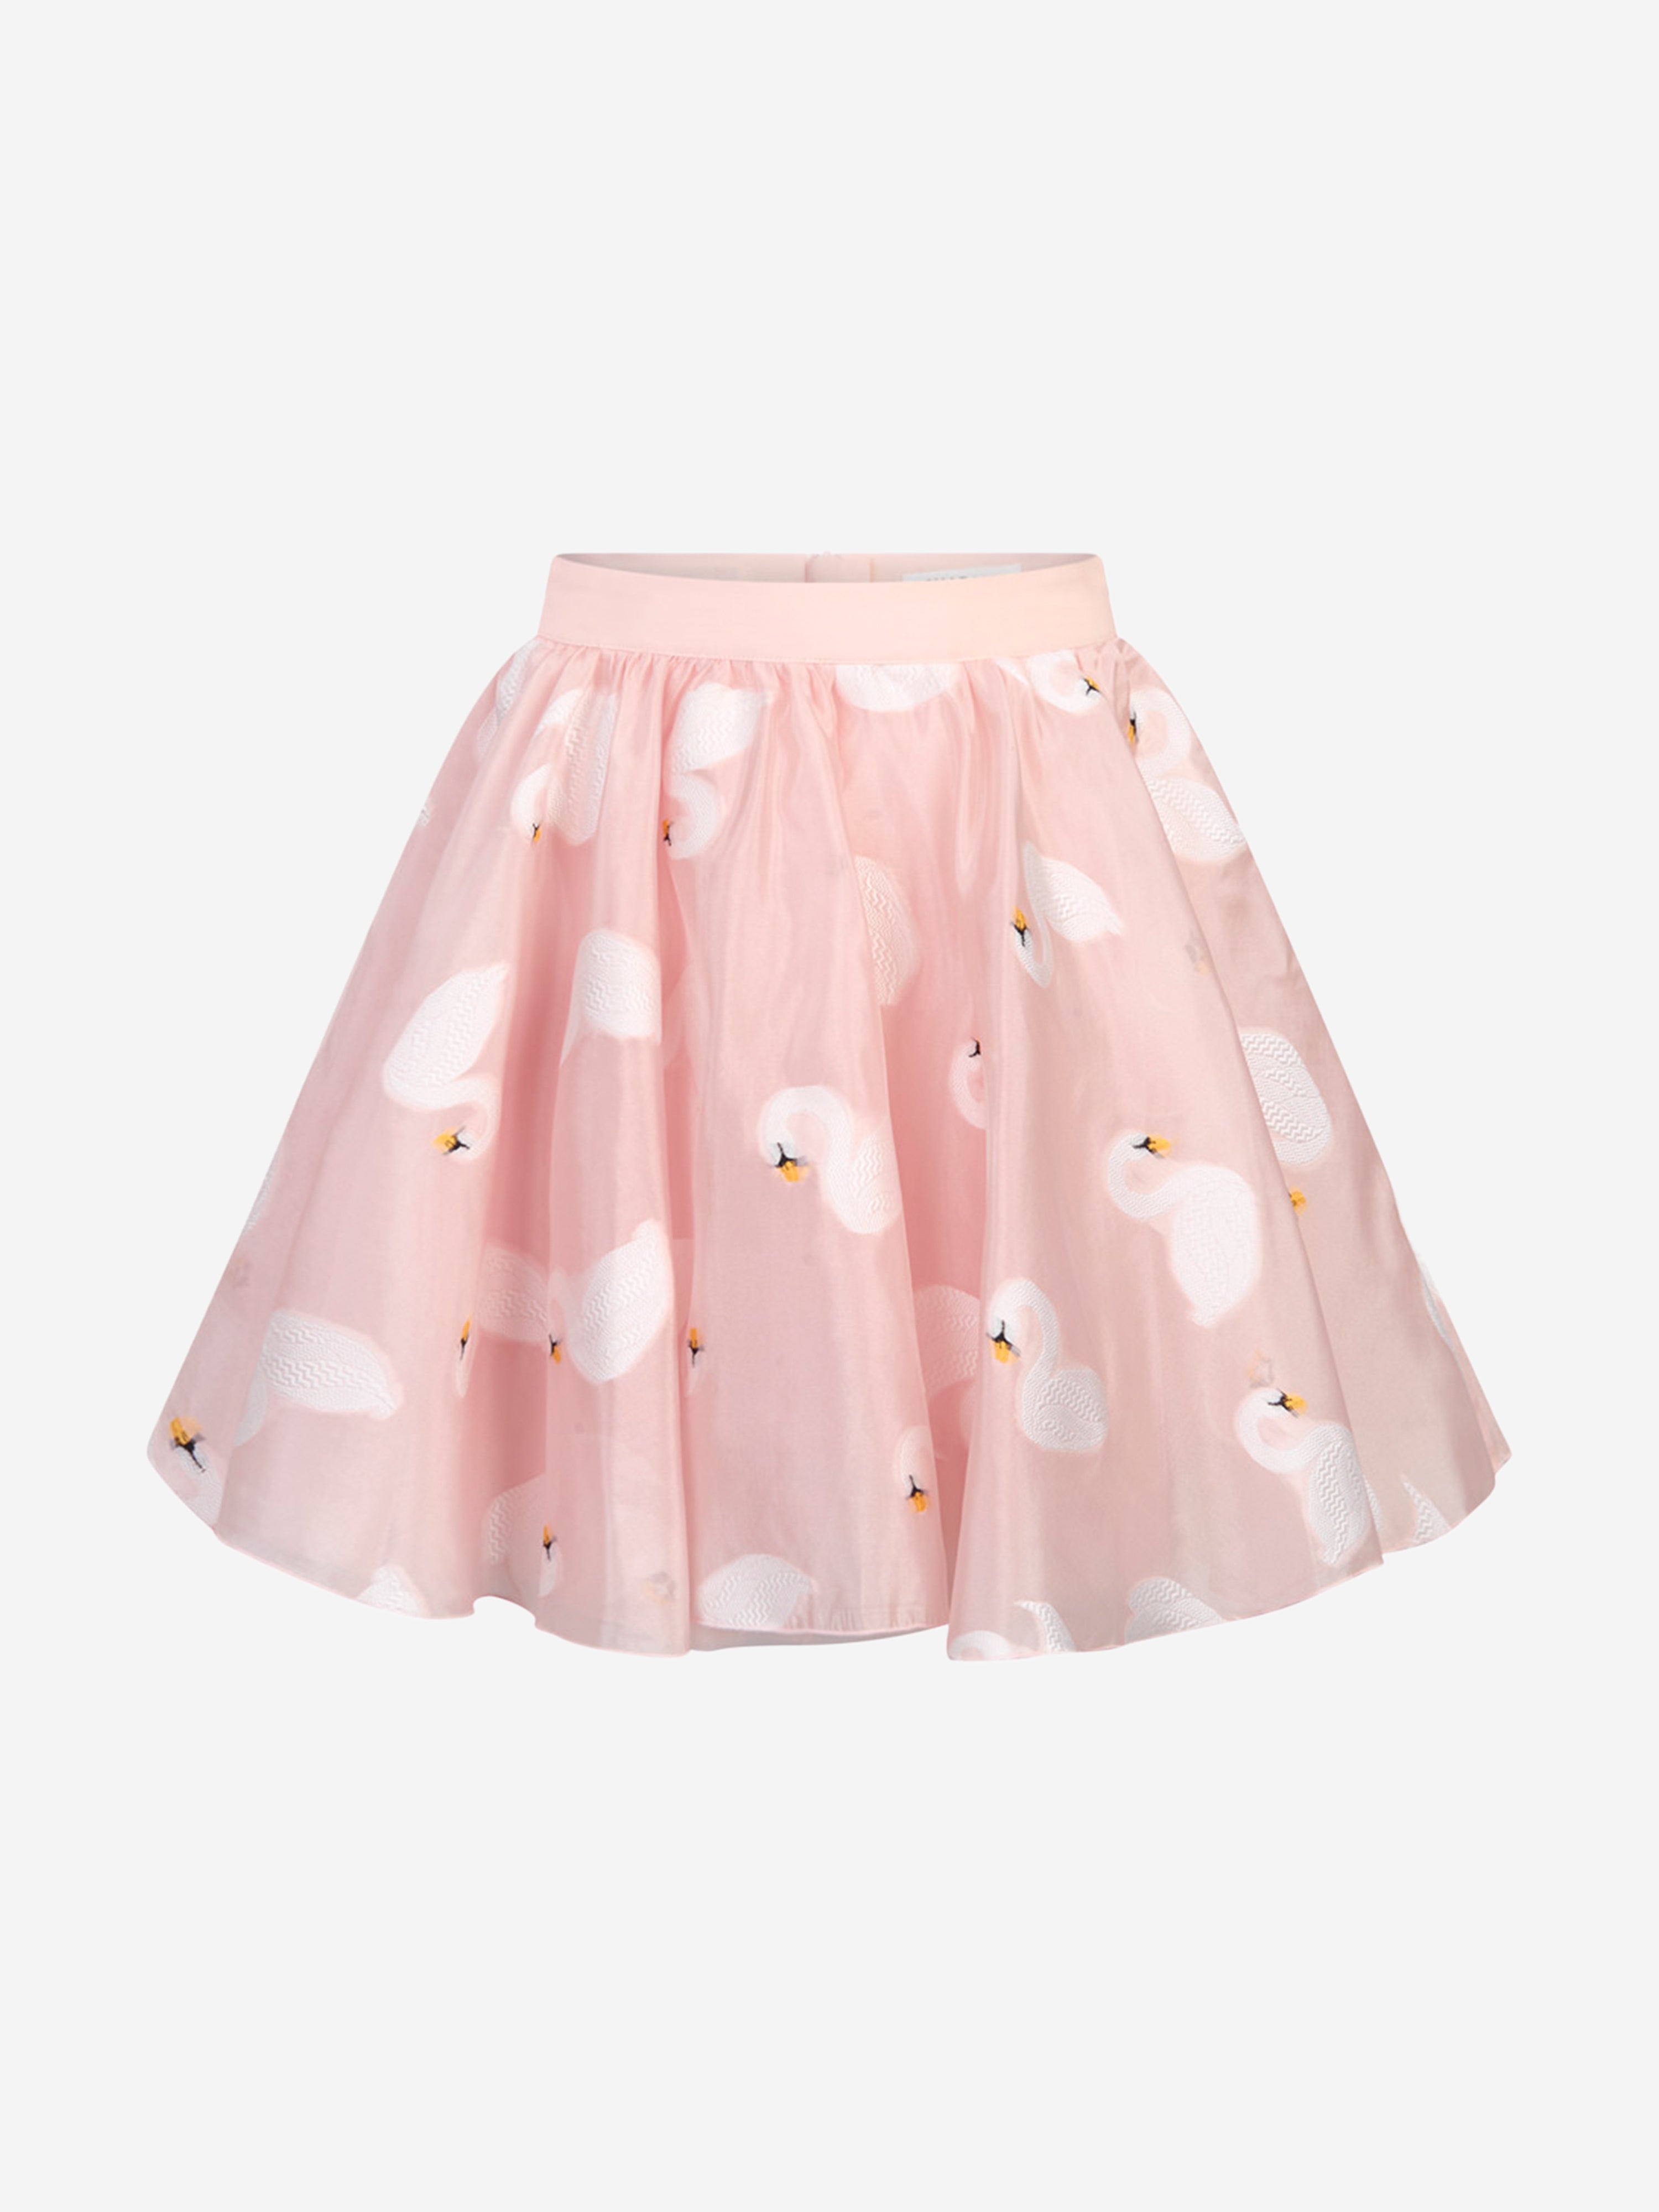 Charabia Babies' Girls Skirt 3 Yrs Pink